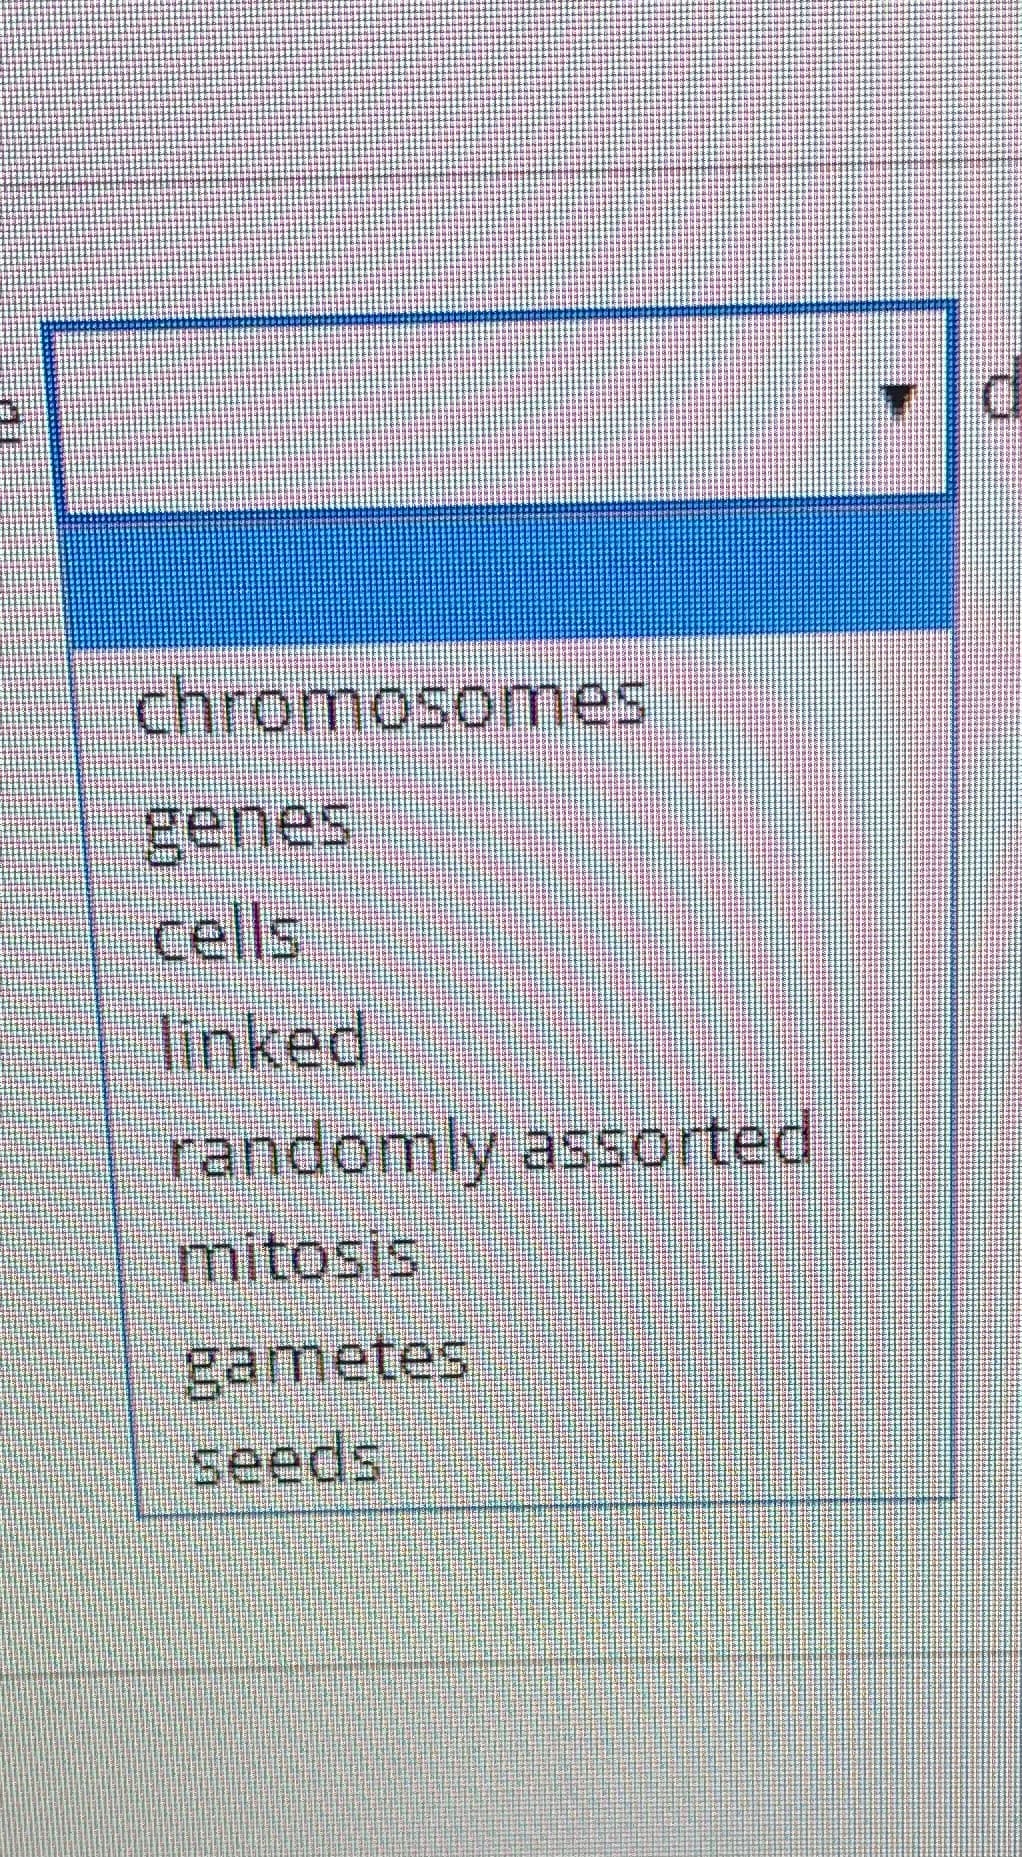 chromosomes
genes
cells
linked
randomly assorted
mitosis
gametes
seeds
